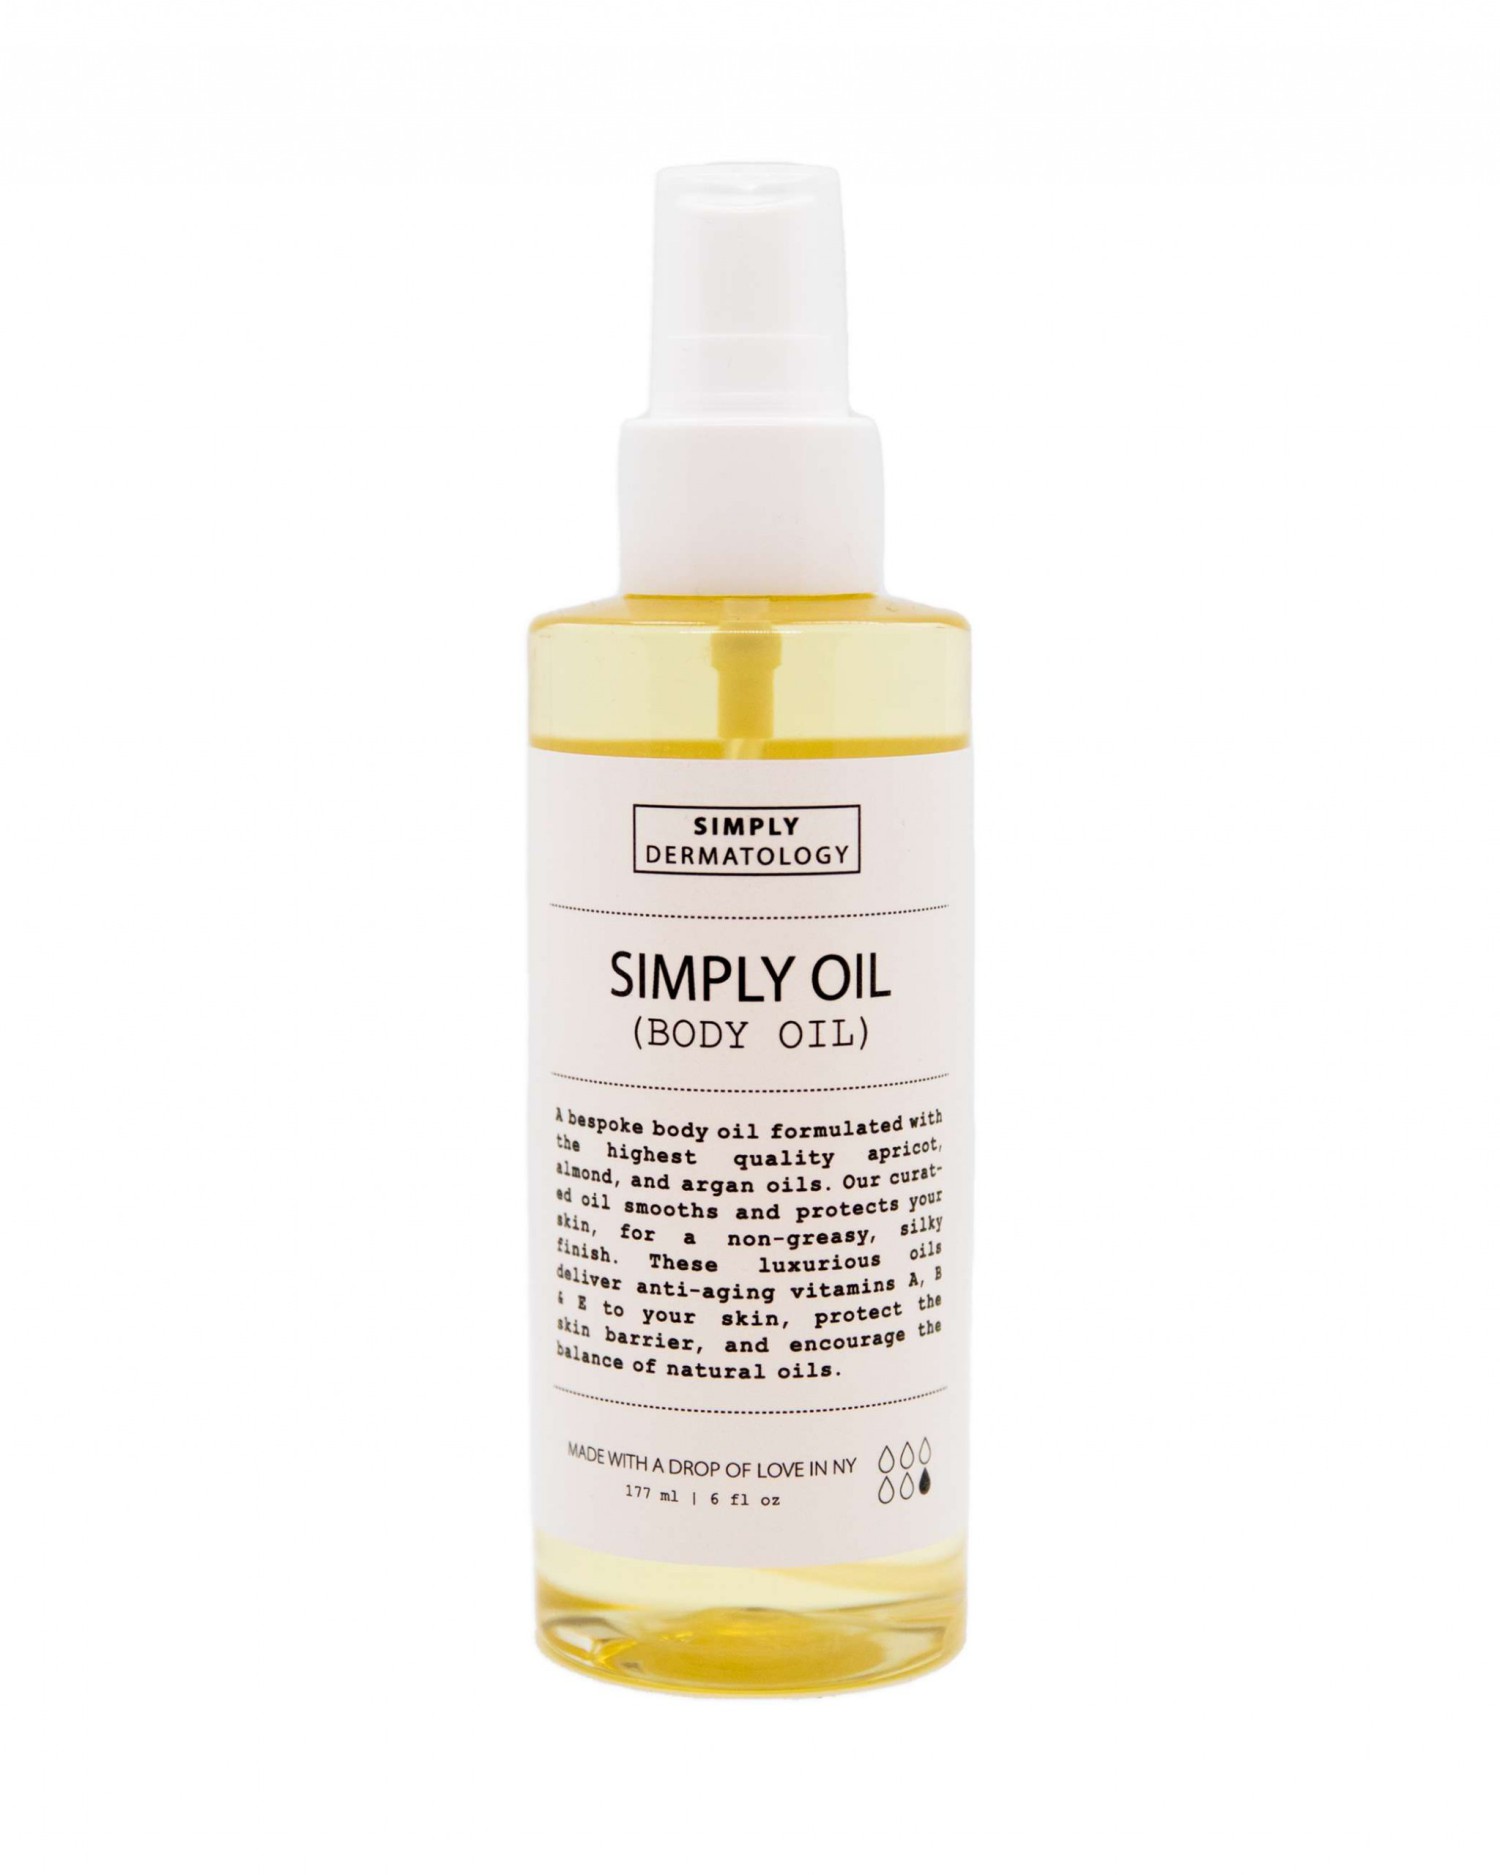 Simply Oil Body Oil bottle